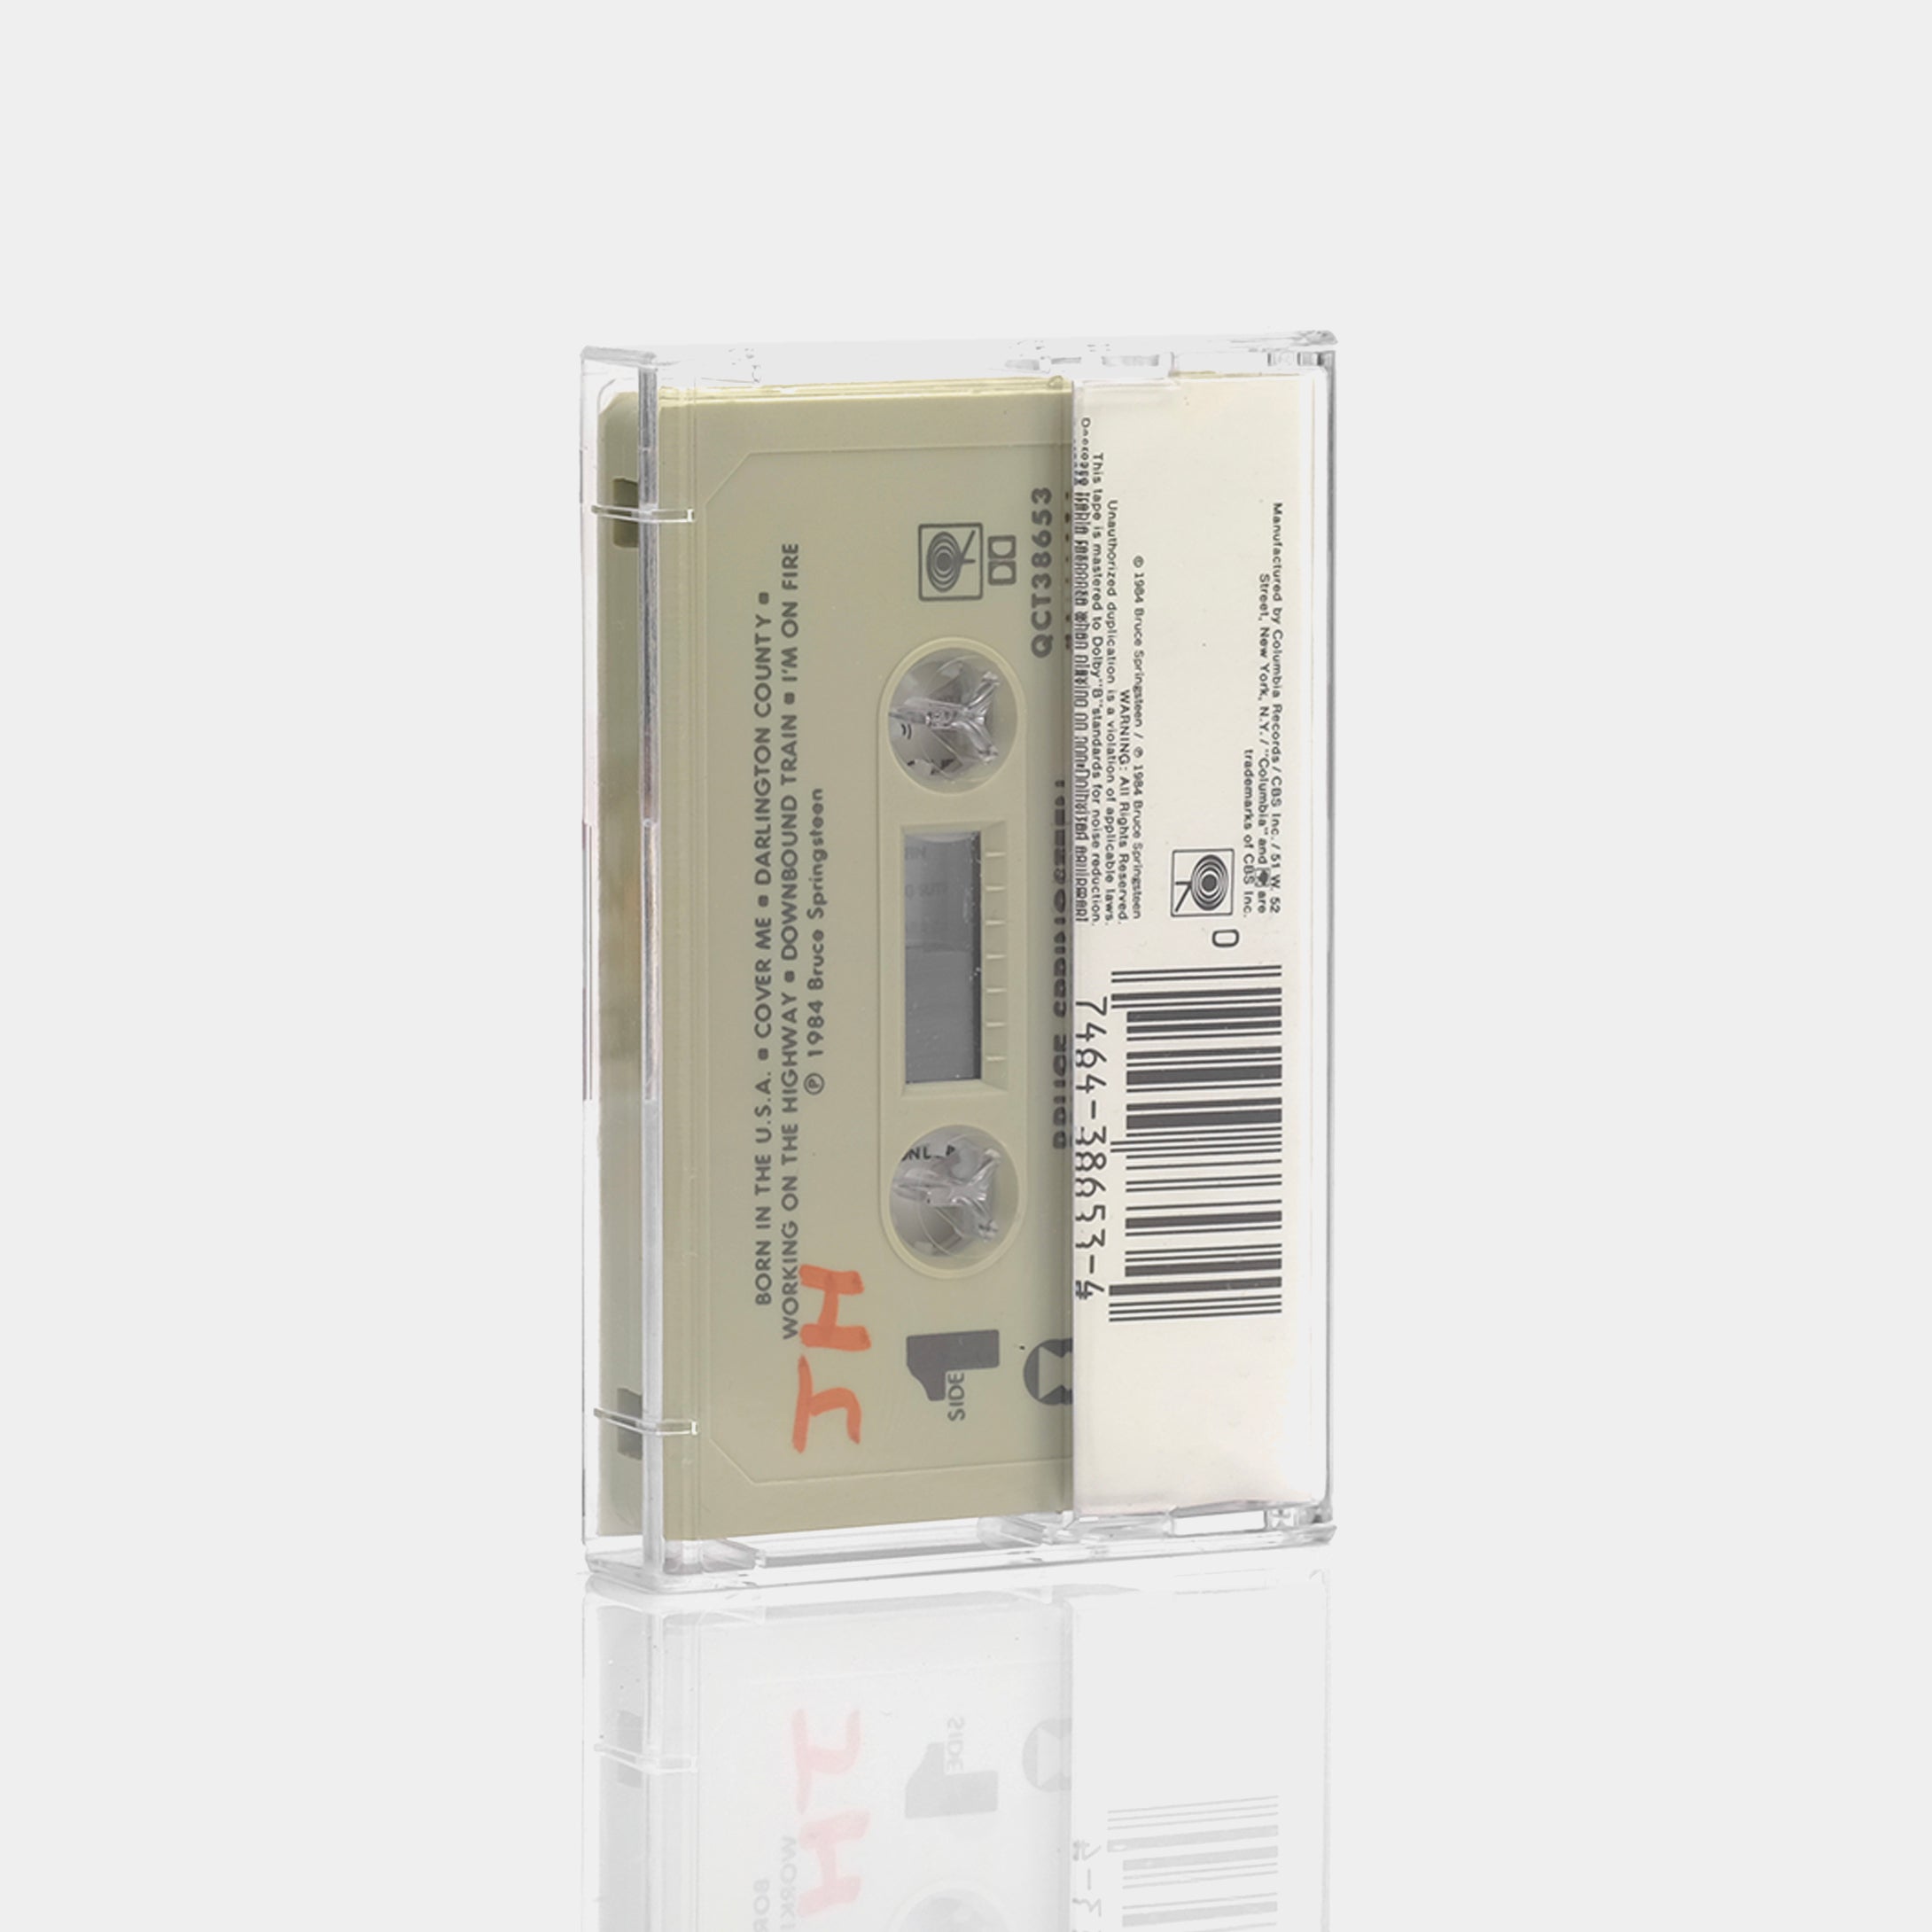 Bruce Springsteen - Born In The USA Cassette Tape